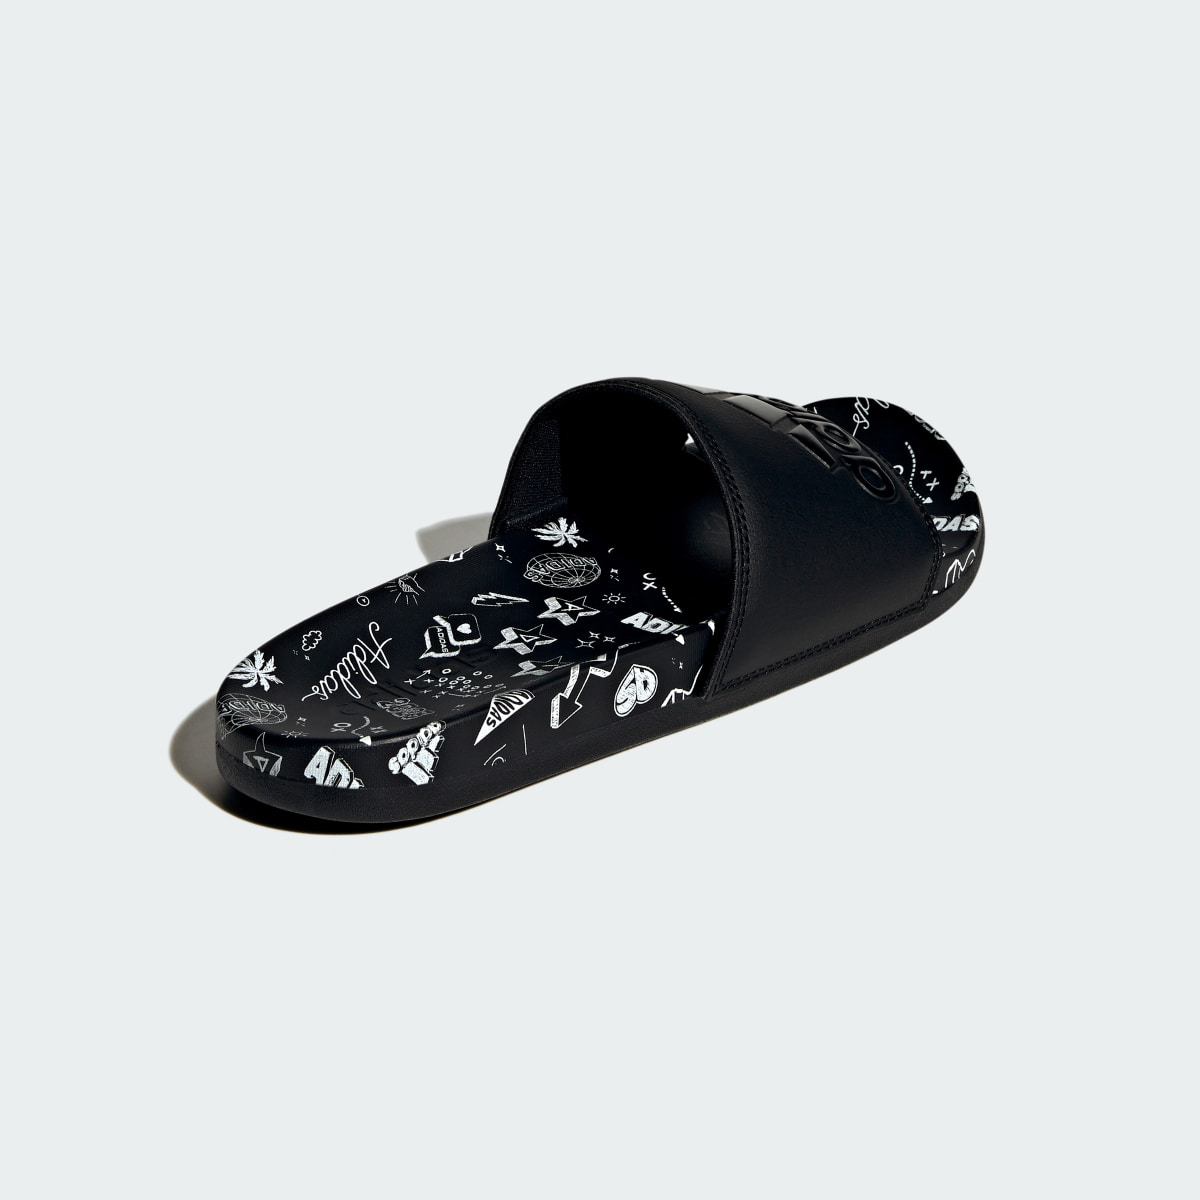 Adidas Adilette Comfort Sandals. 6